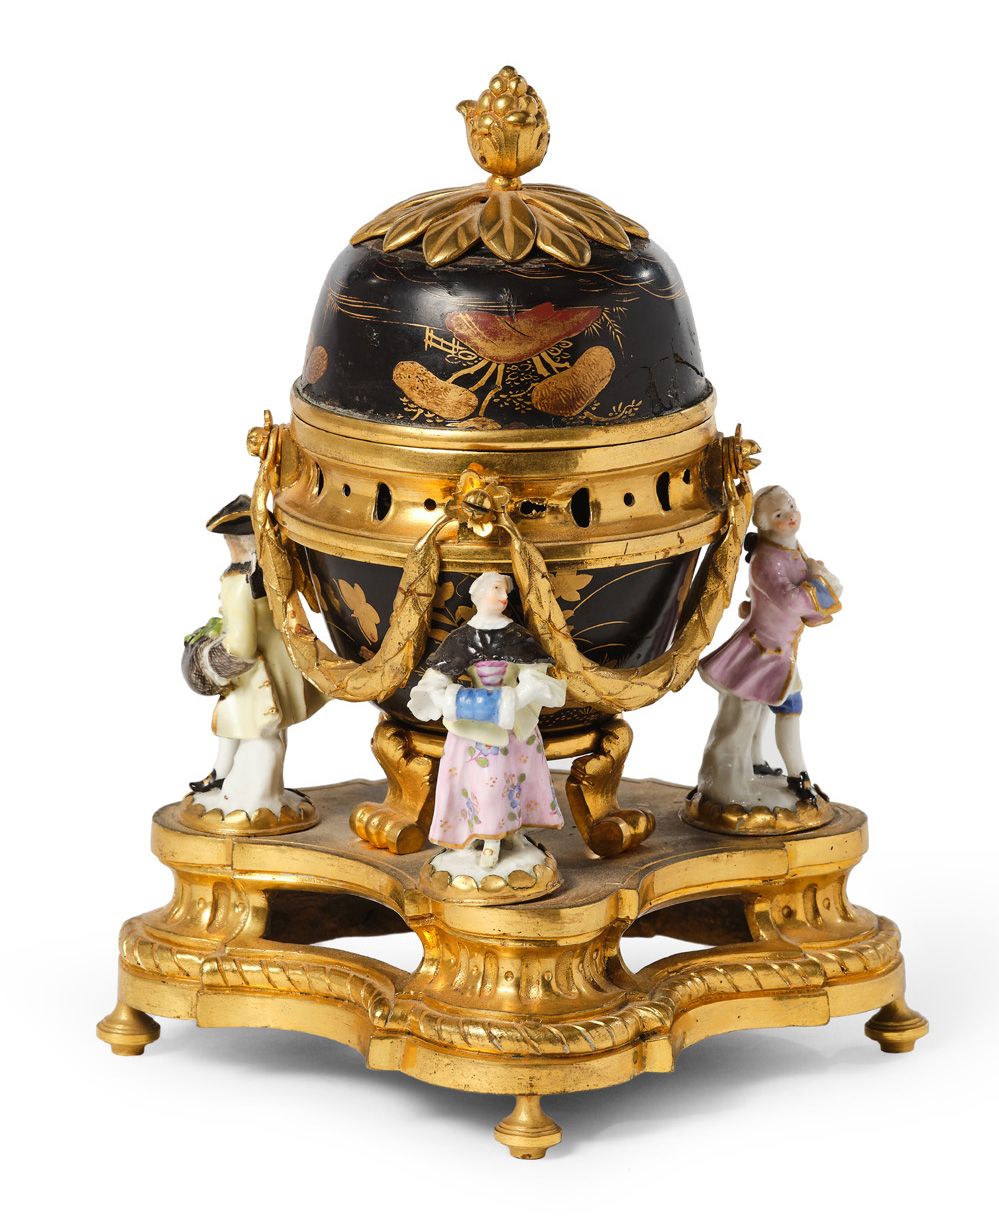 Null 一个卵形的日本漆器烛台，上面有三个多色的萨克森瓷器和鎏金铜像。18世纪。
高度：21厘米 - 宽度：16厘米（小事故）
出处
前Kasic & Vac&hellip;